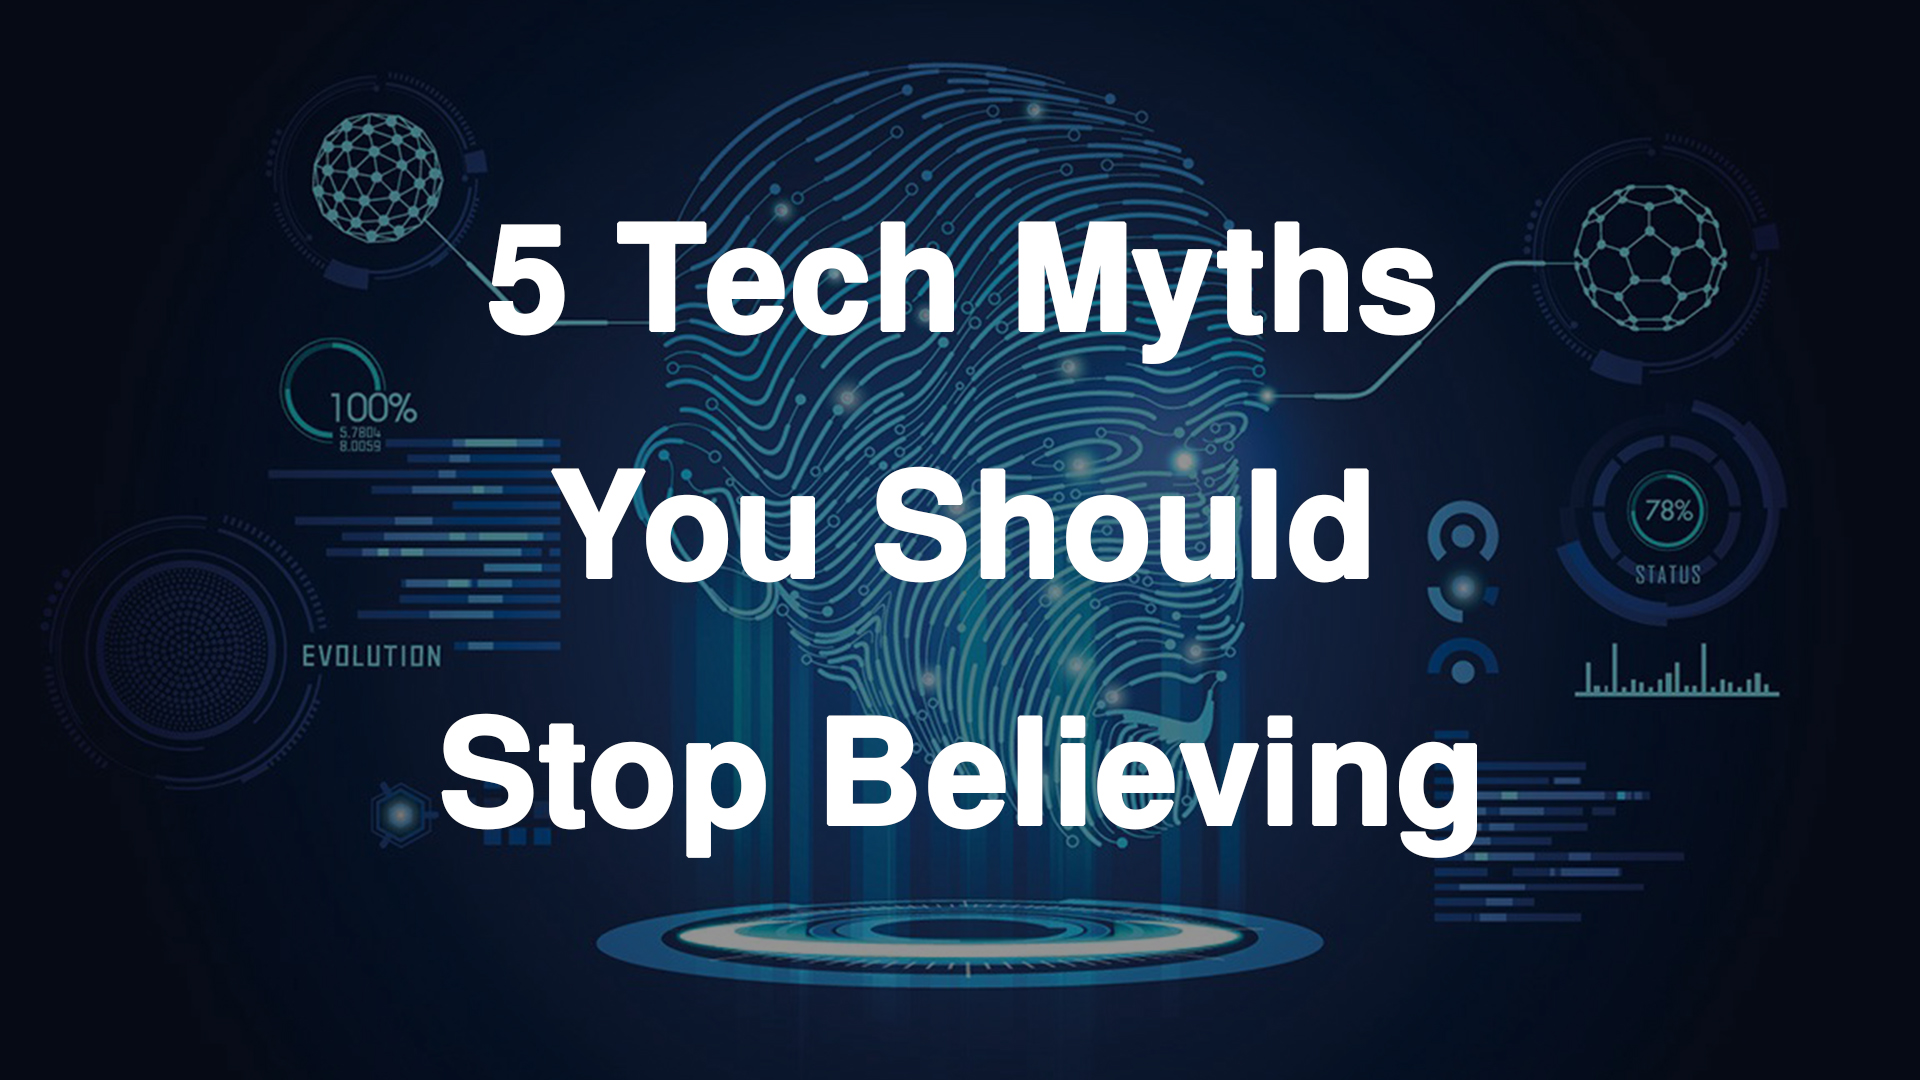 Tech Myths you should know